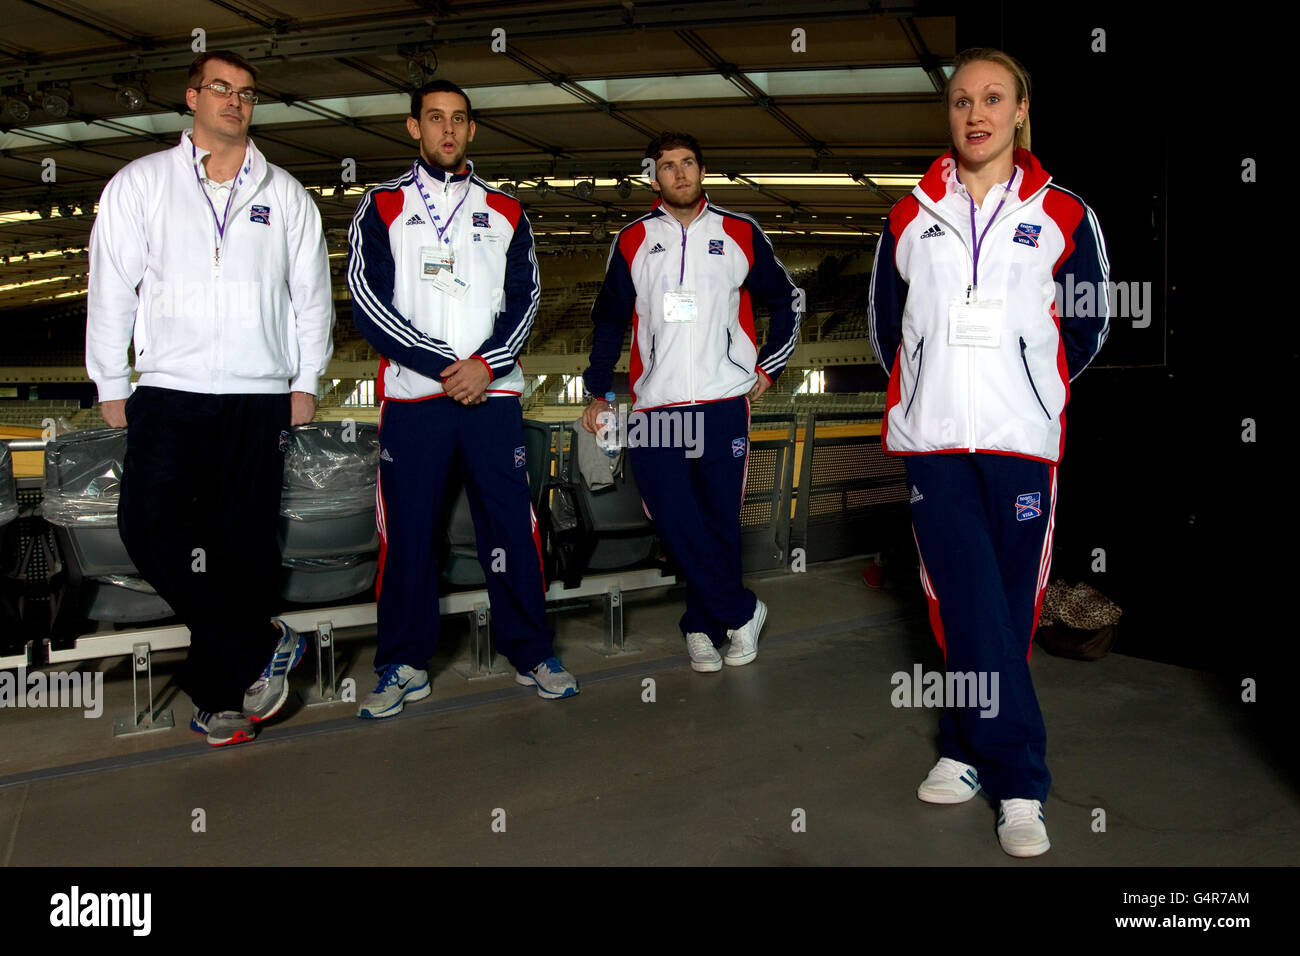 Olympics - Team 2012 Photocall - Olympic Park Velodrome Stock Photo